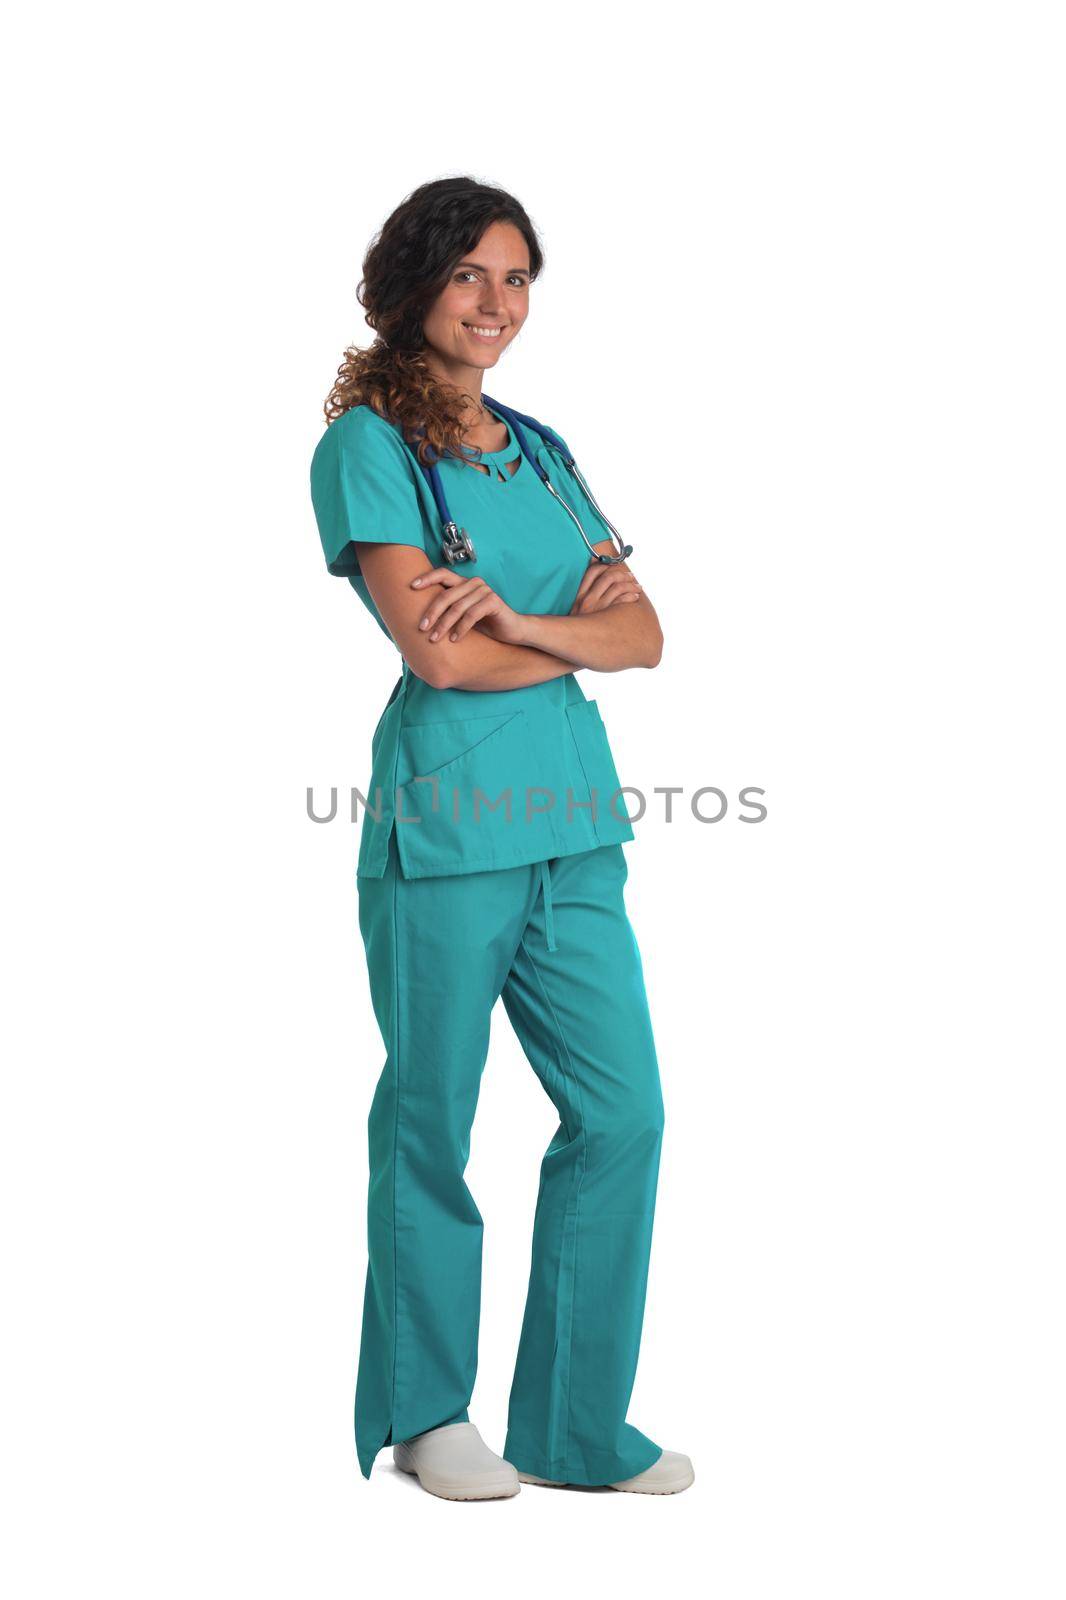 Nurse doctor woman portrait by ALotOfPeople